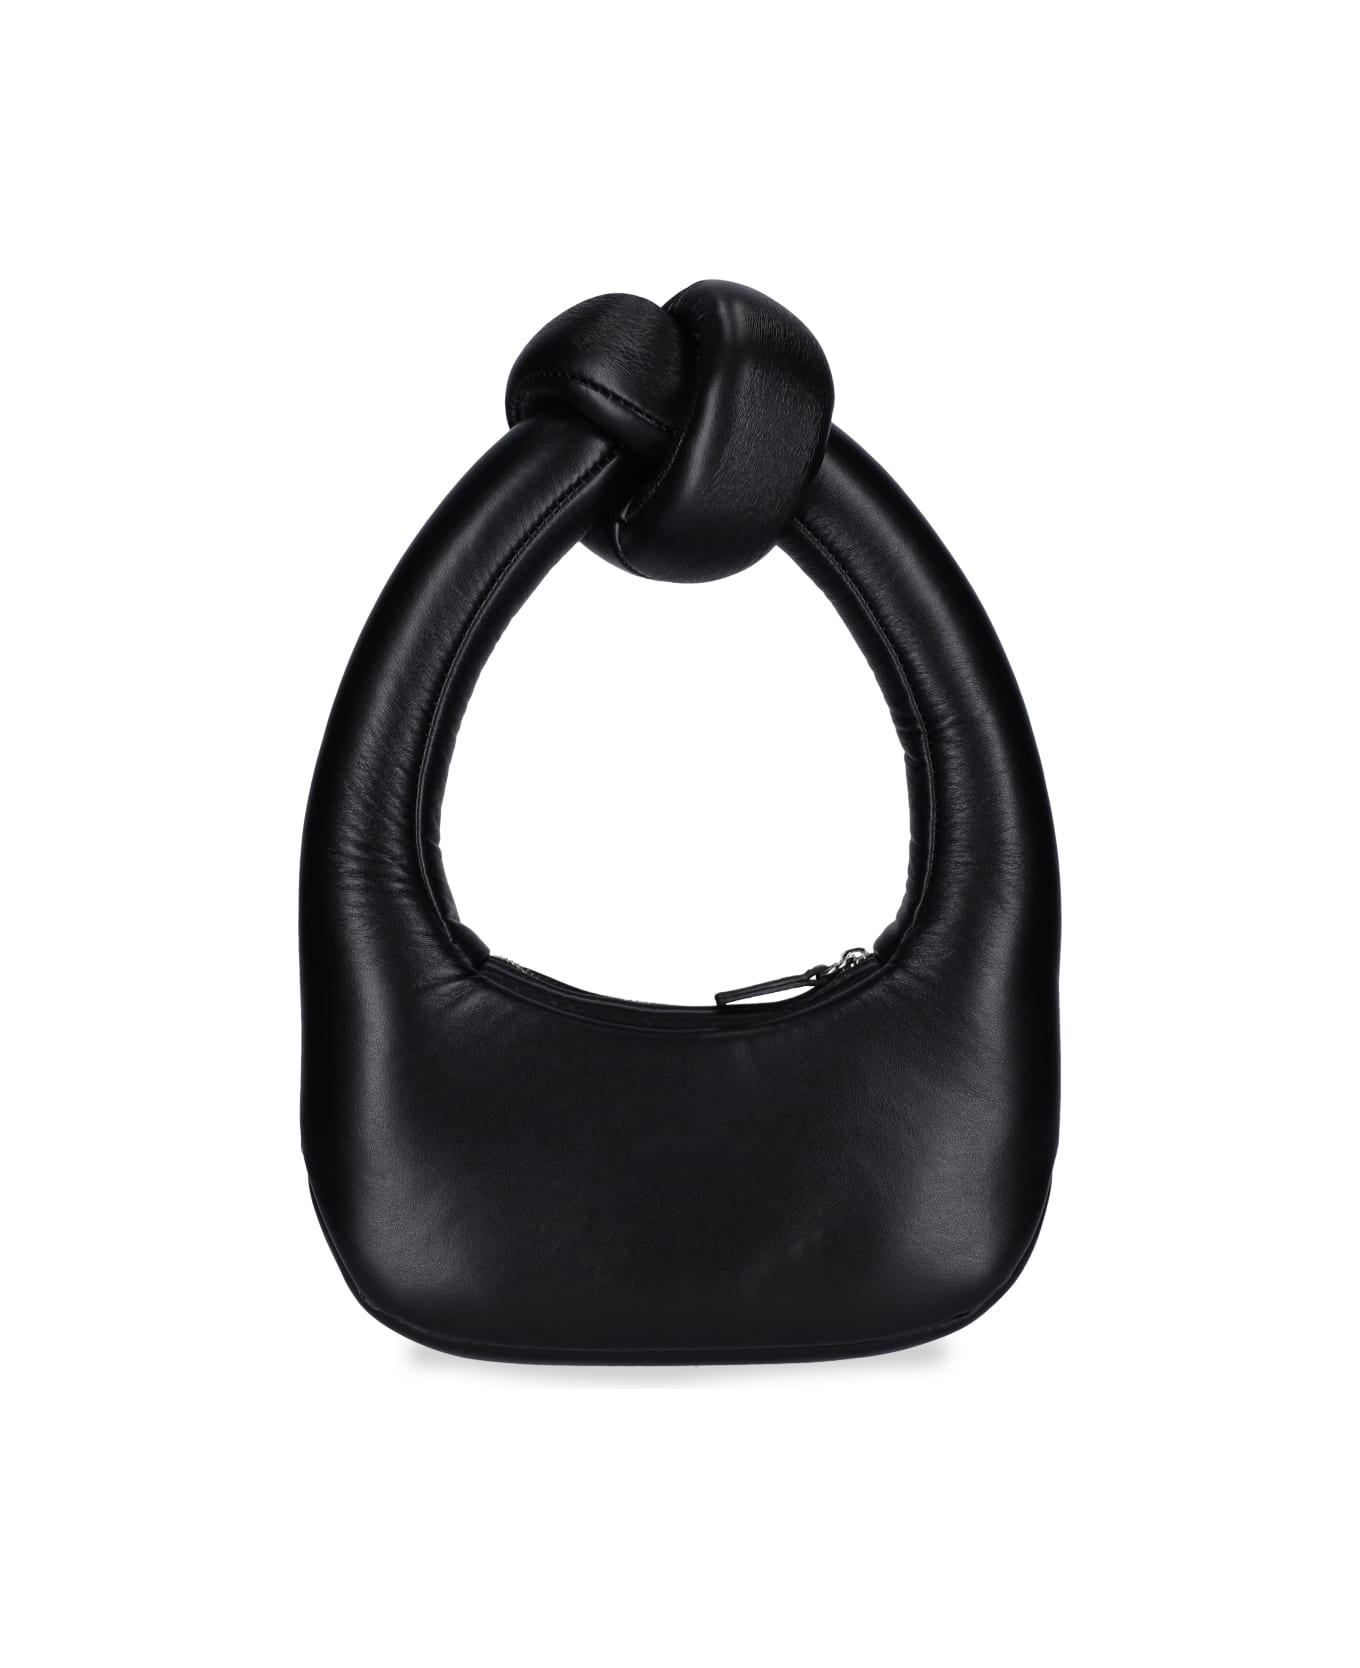 A.W.A.K.E. Mode "mia" Handbag - Black   トートバッグ